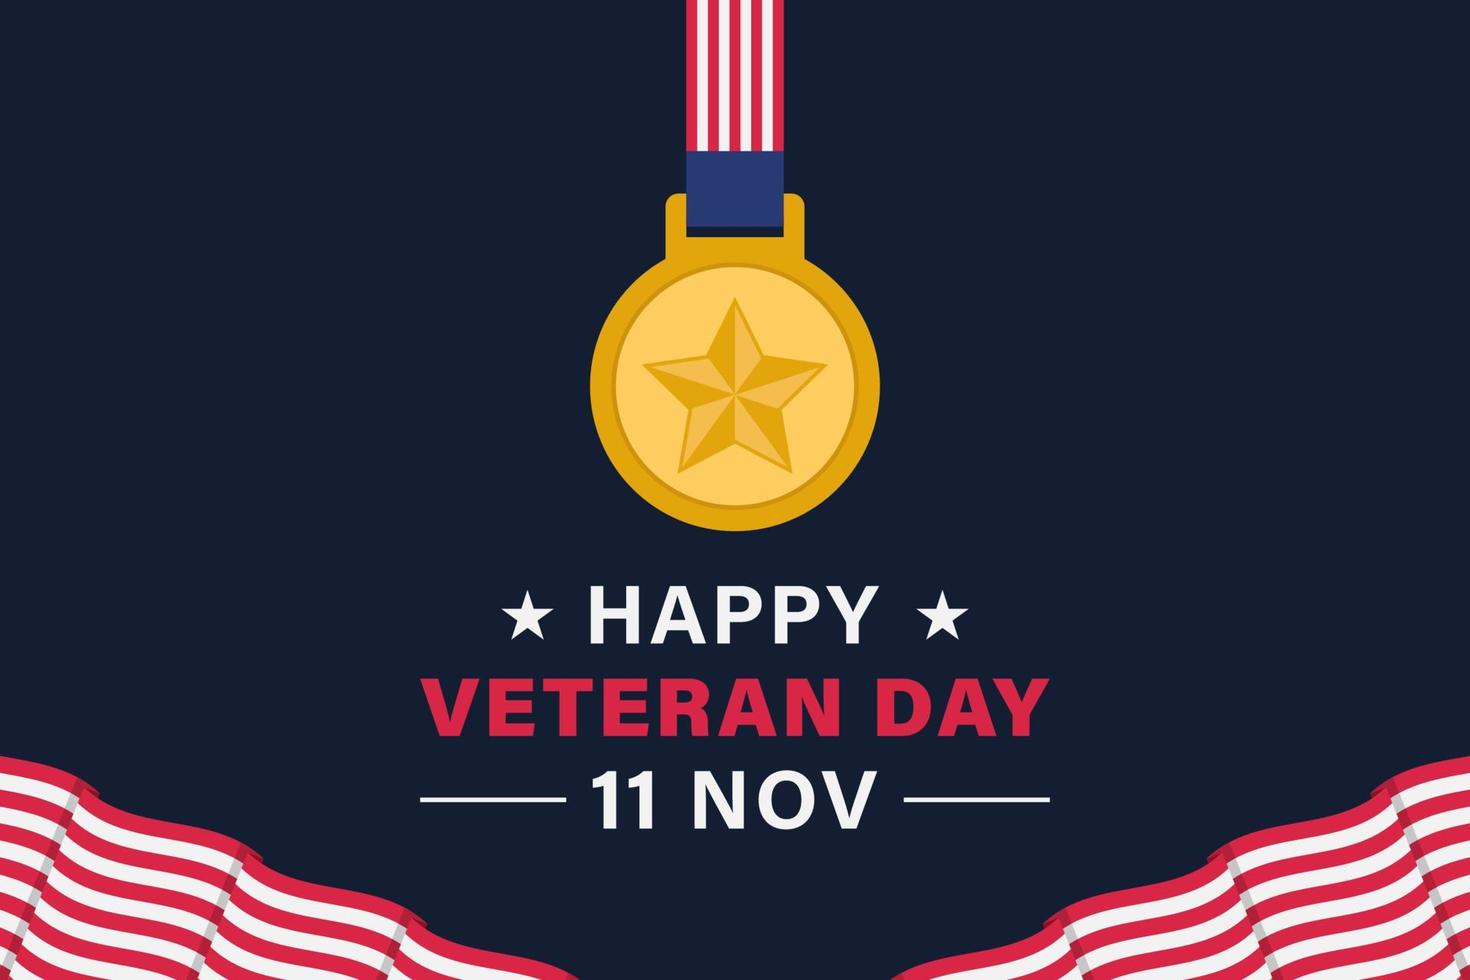 Veteran day vector background banner poster